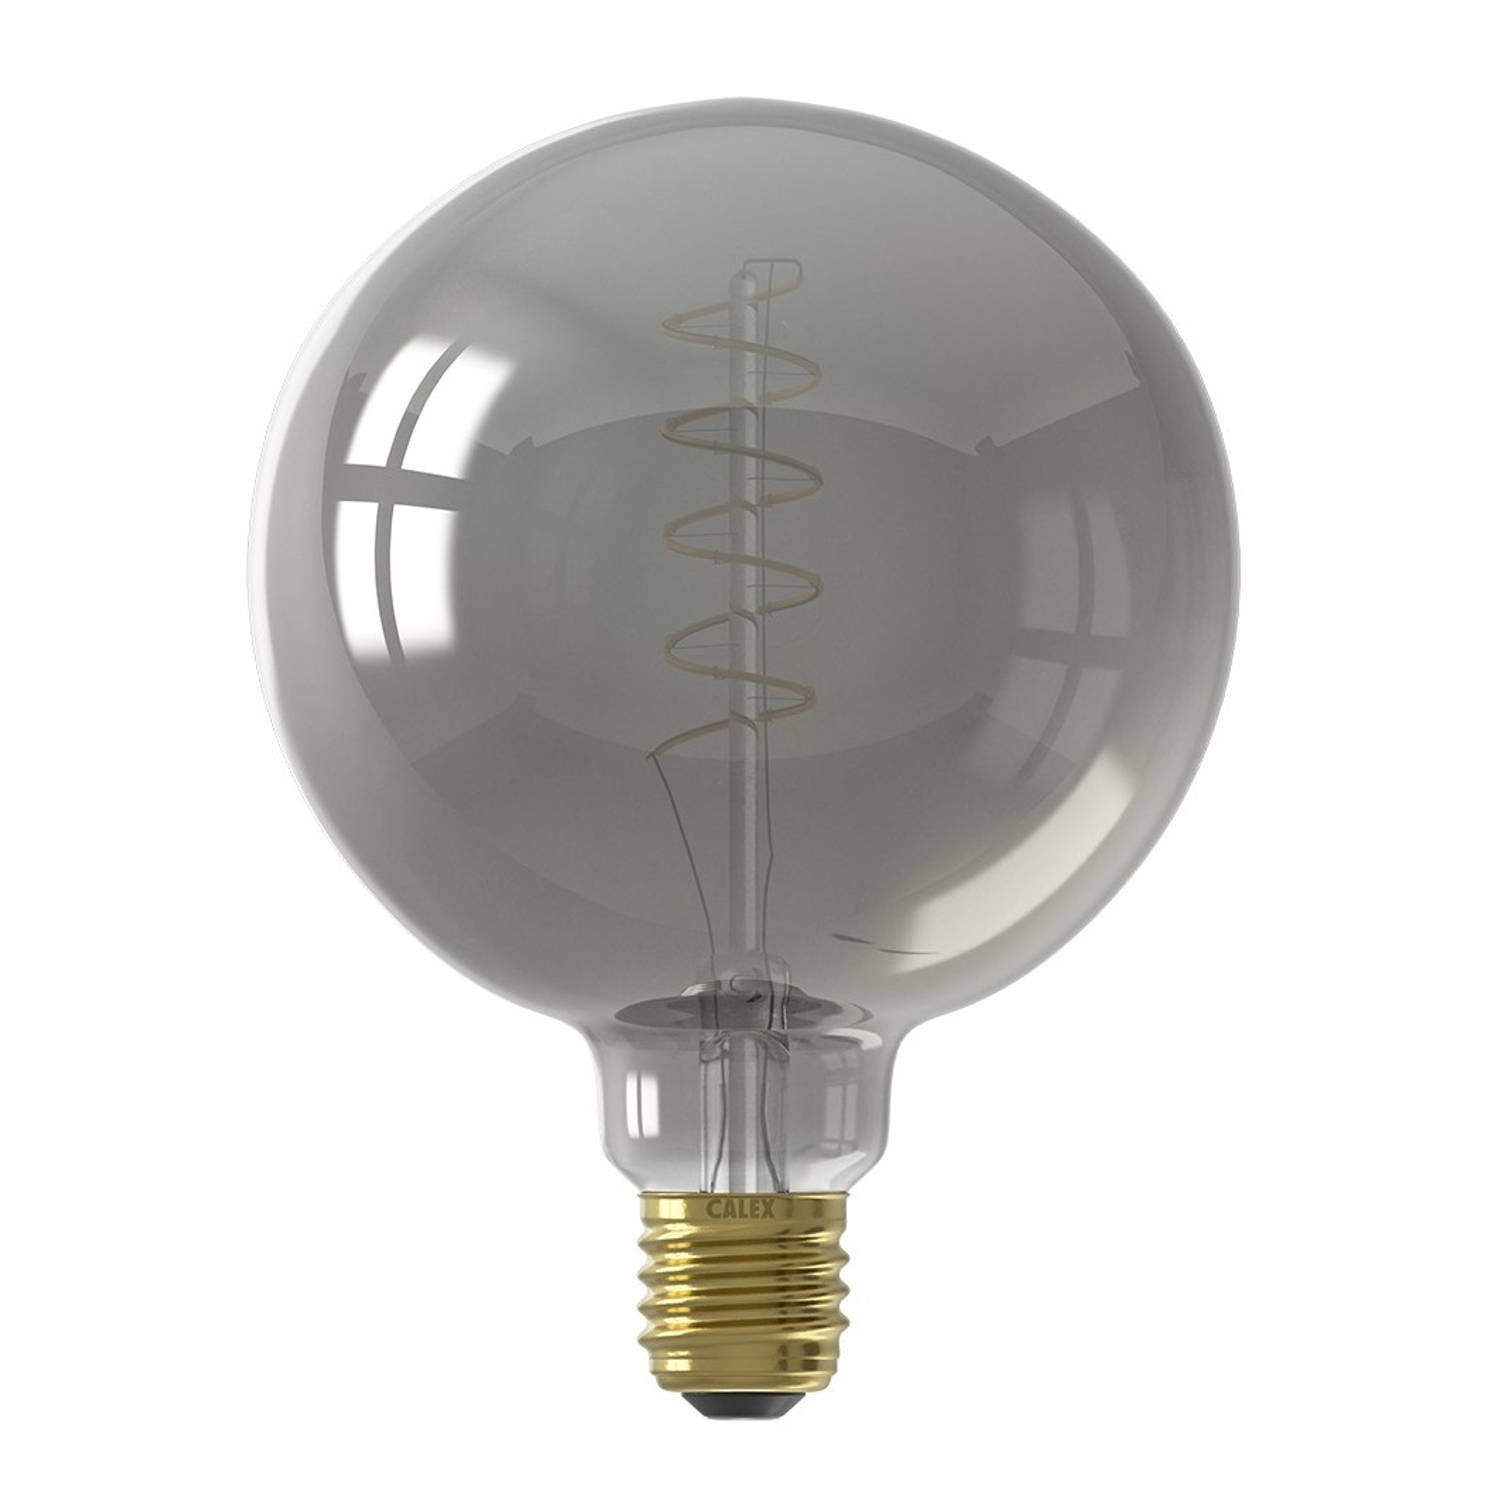 Calex globelamp LED filament titanium 4W (vervangt 10W) grote fitting E27 125mm